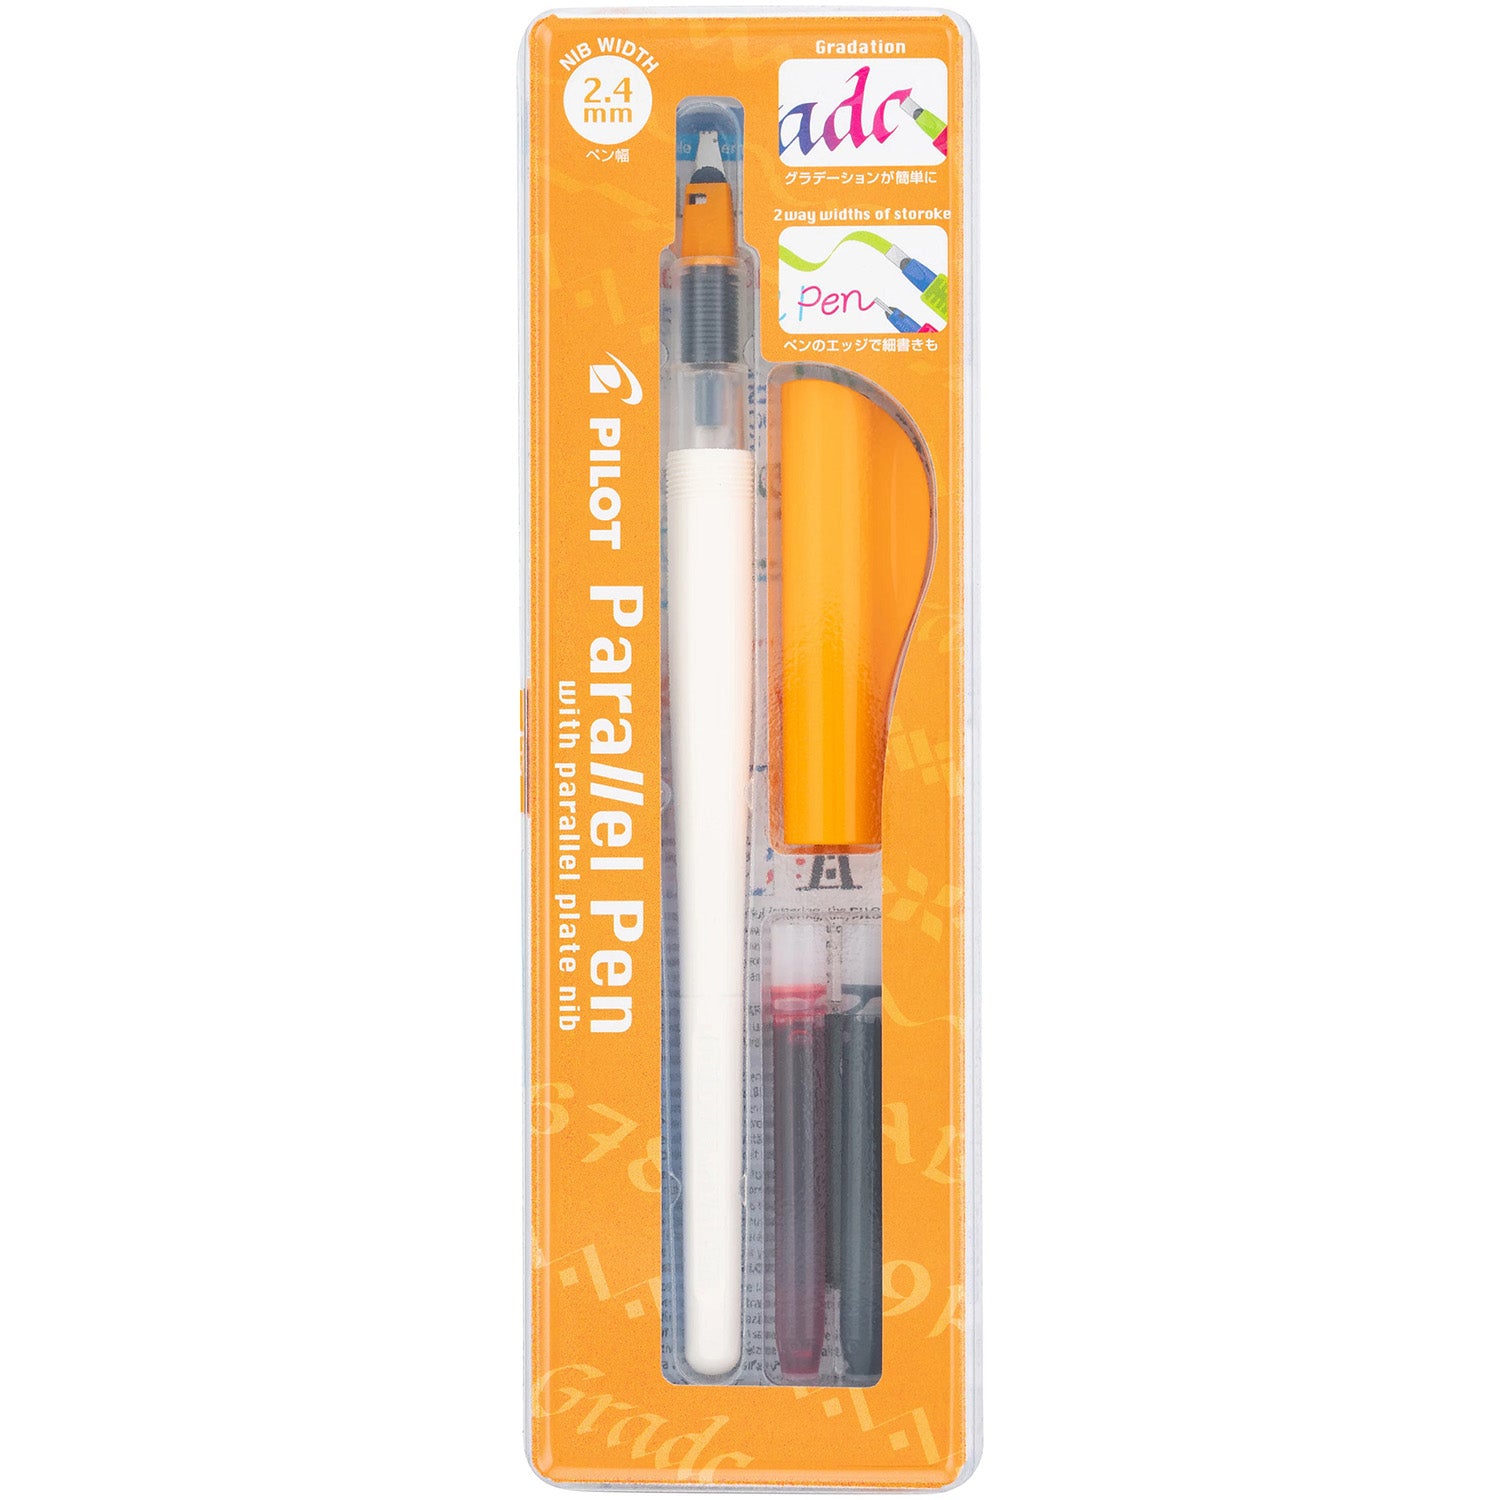 Pilot Parallel Pen - 2.4 mm Nib - Calligraphy Fountain Pen package